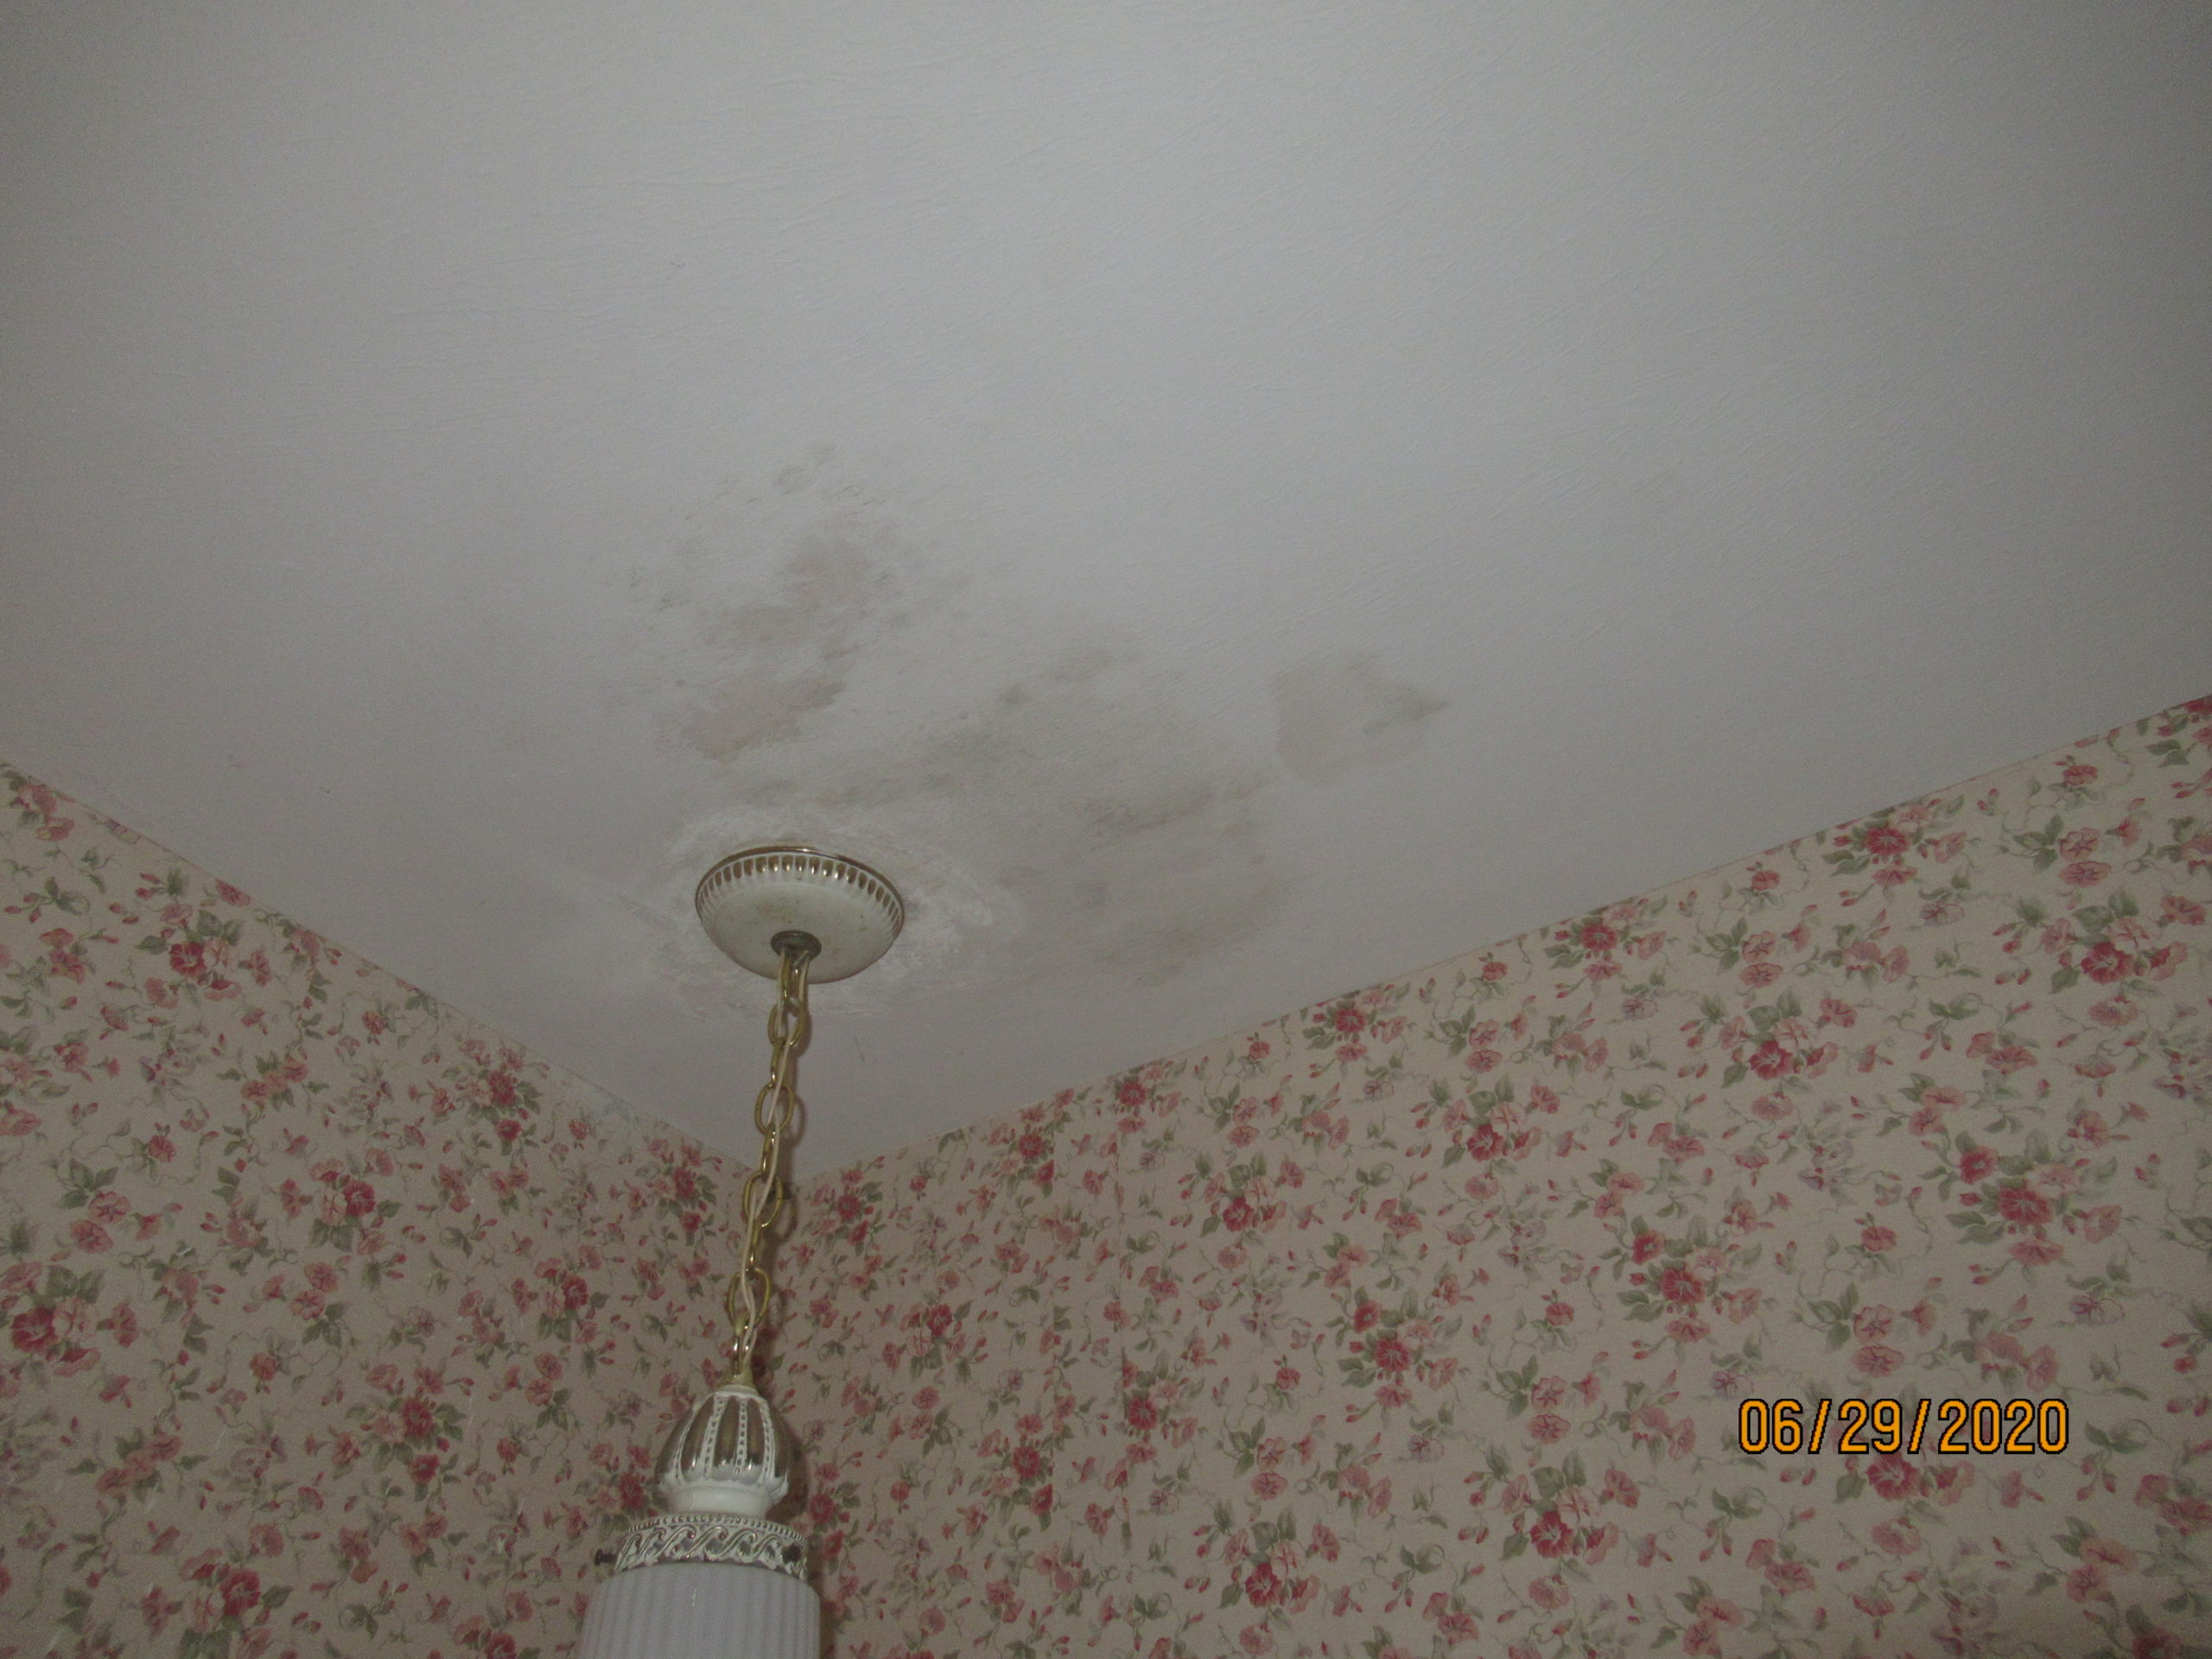 Leaking ceiling light fixture